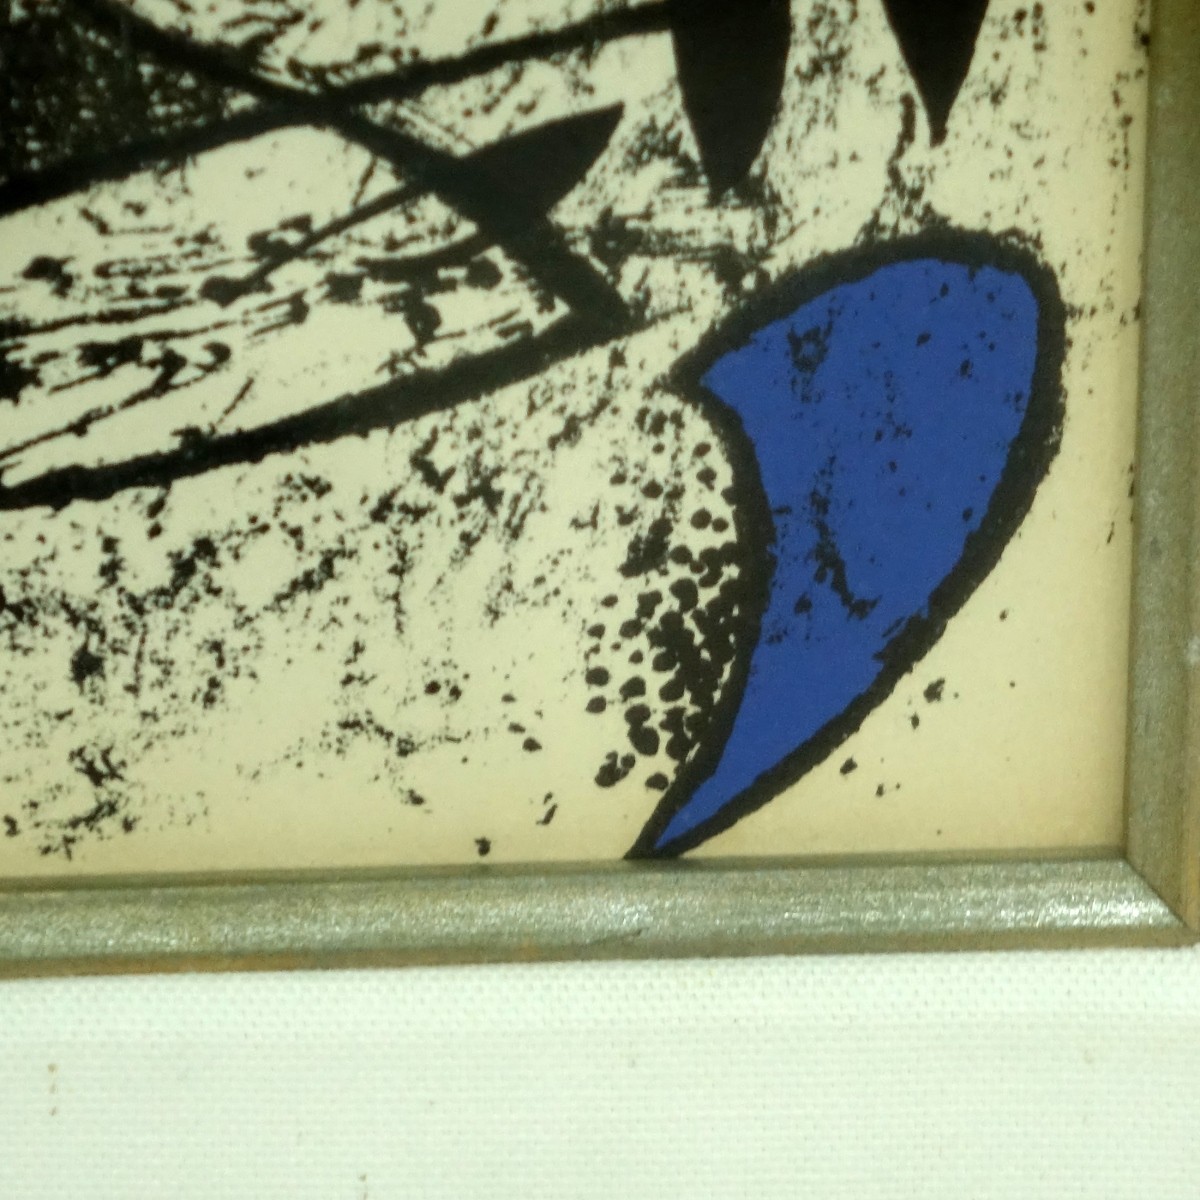 Joan Miro (1893-1983) Lithograph